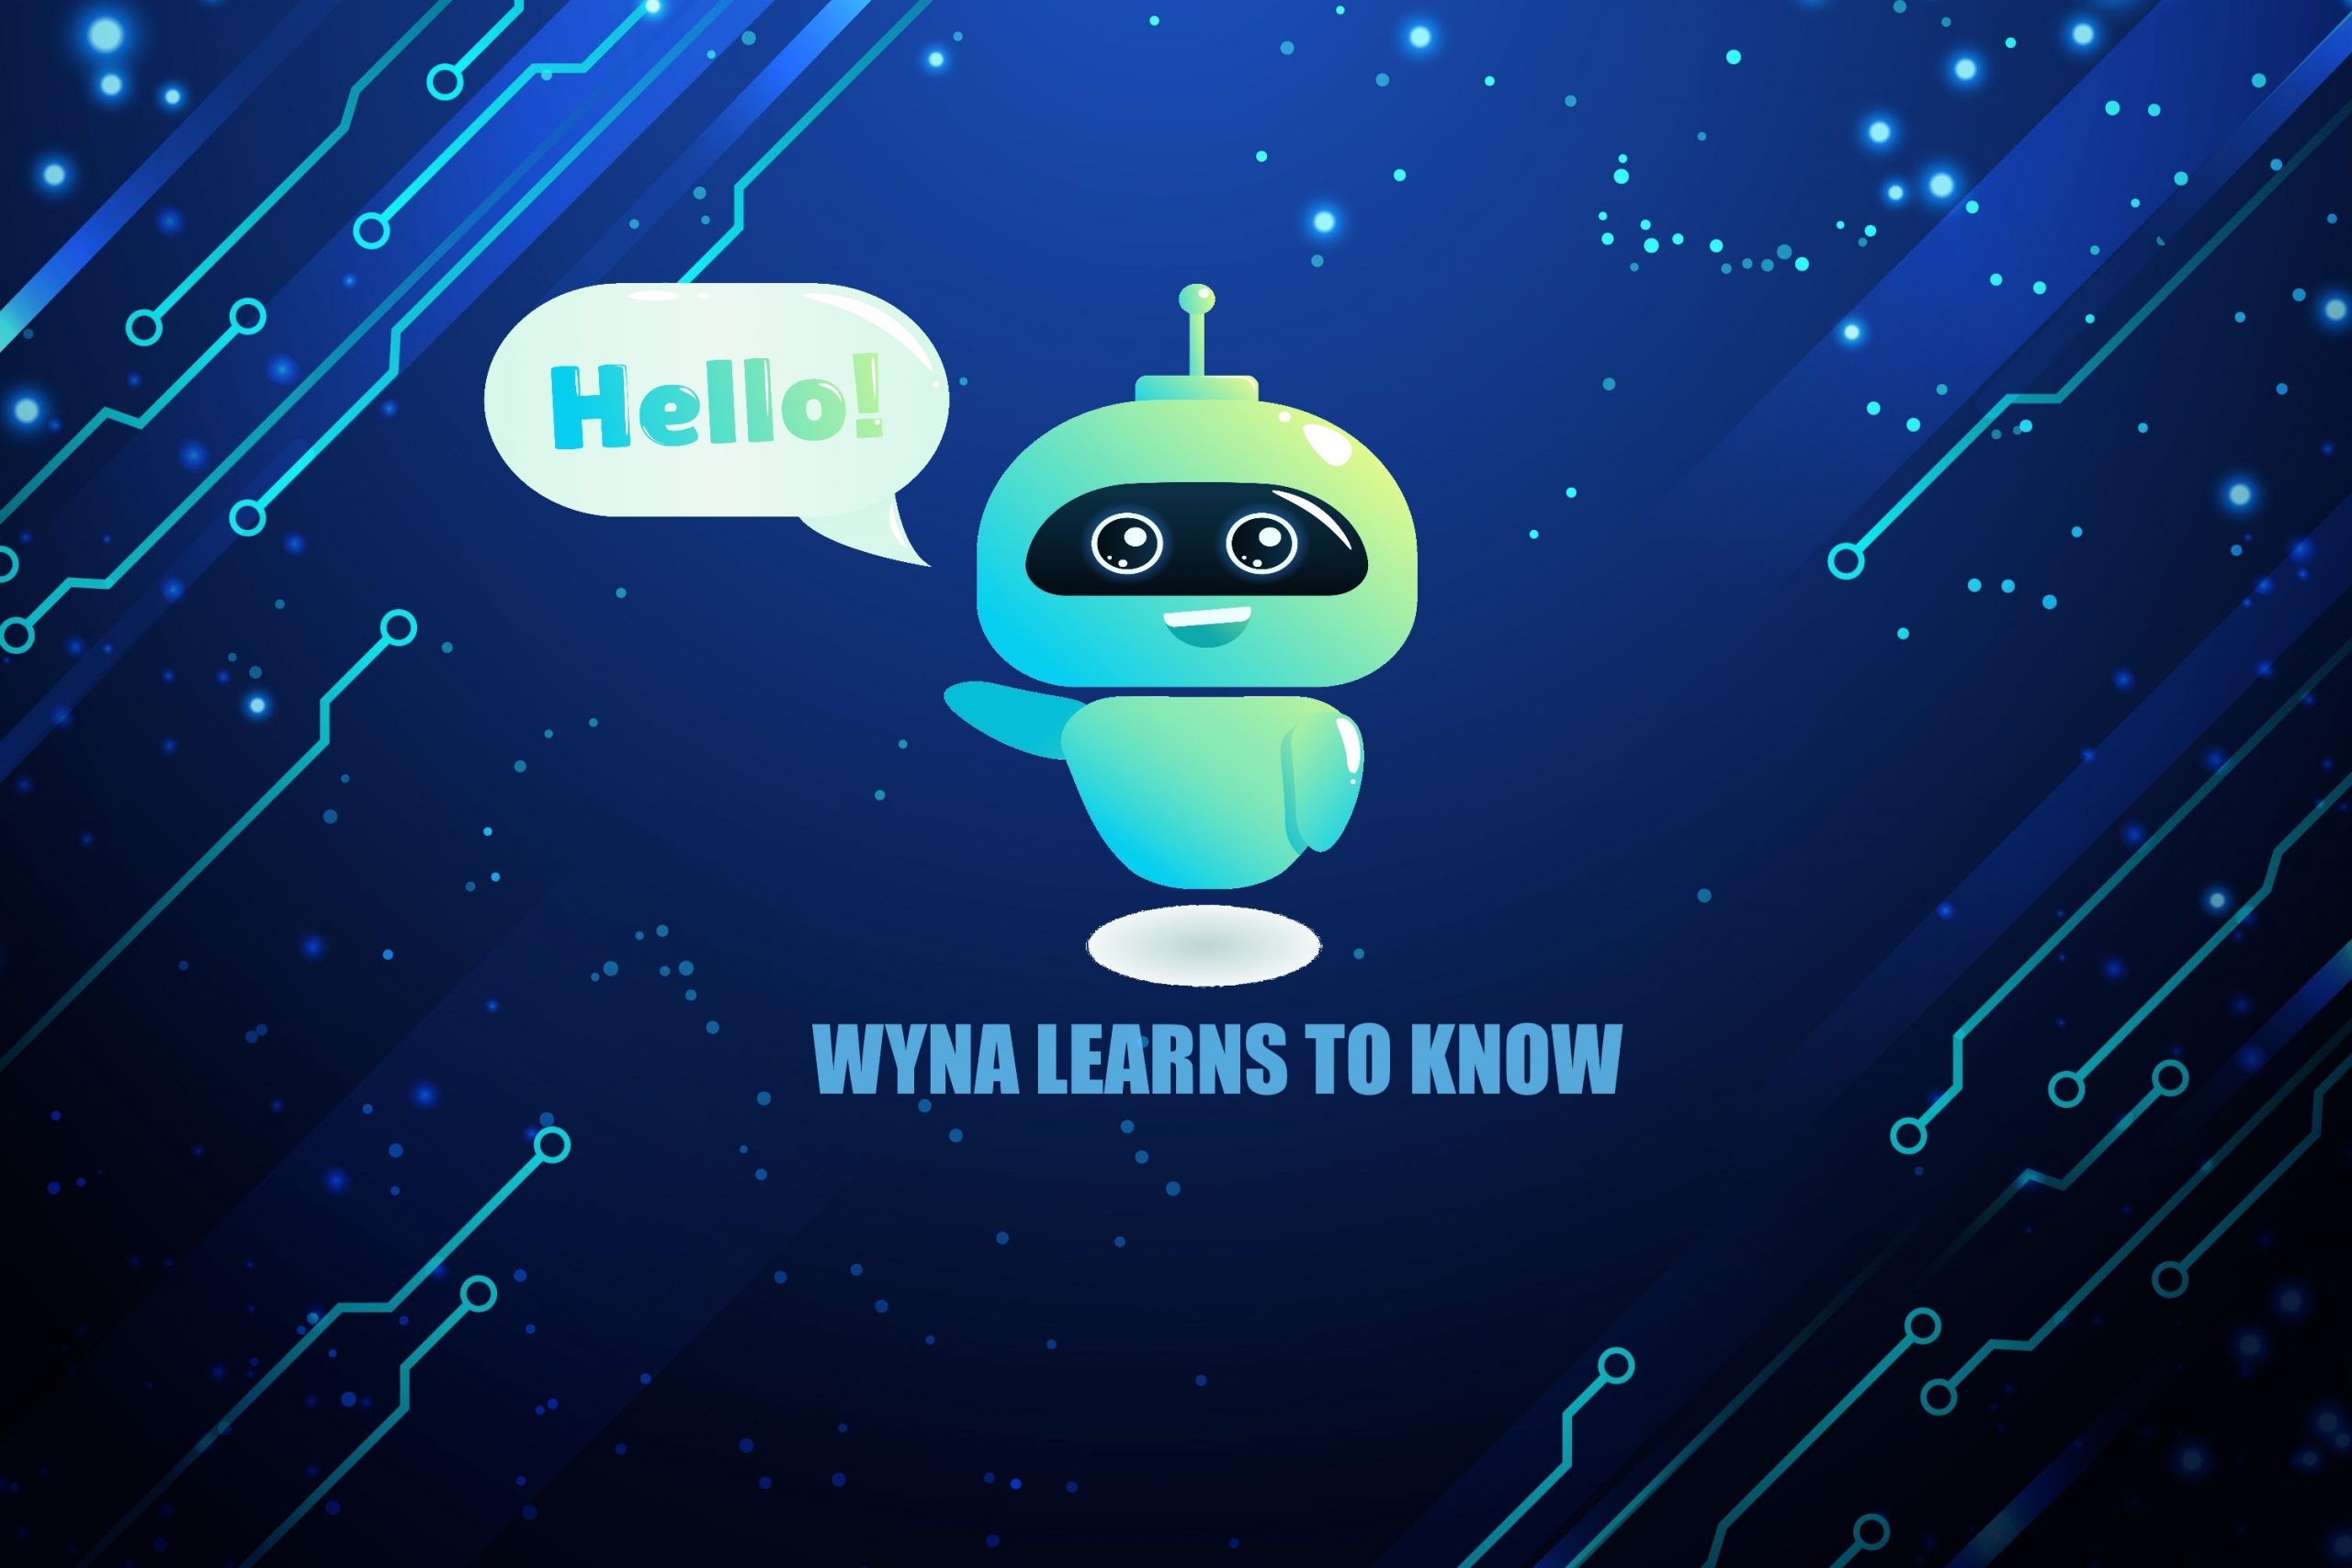 WYNA Learns To Know You